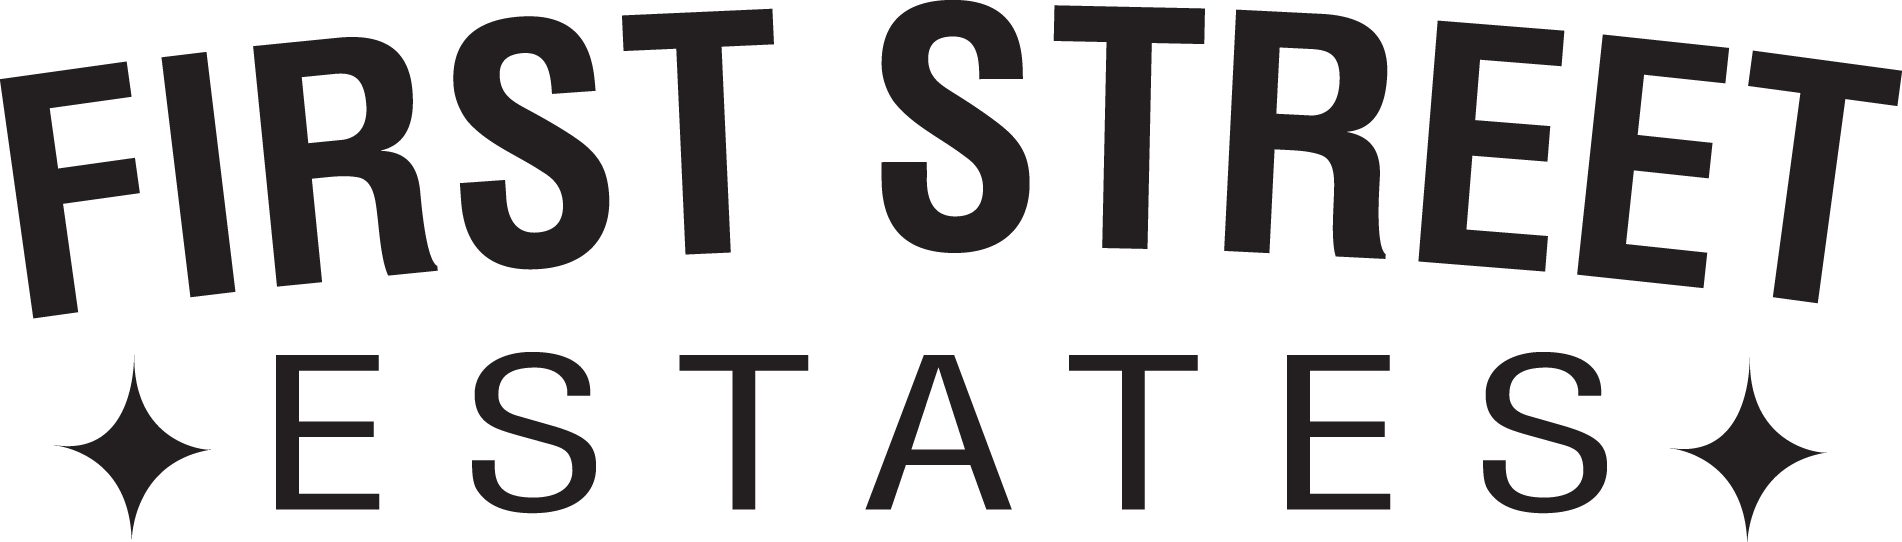 First Street Estates Logo